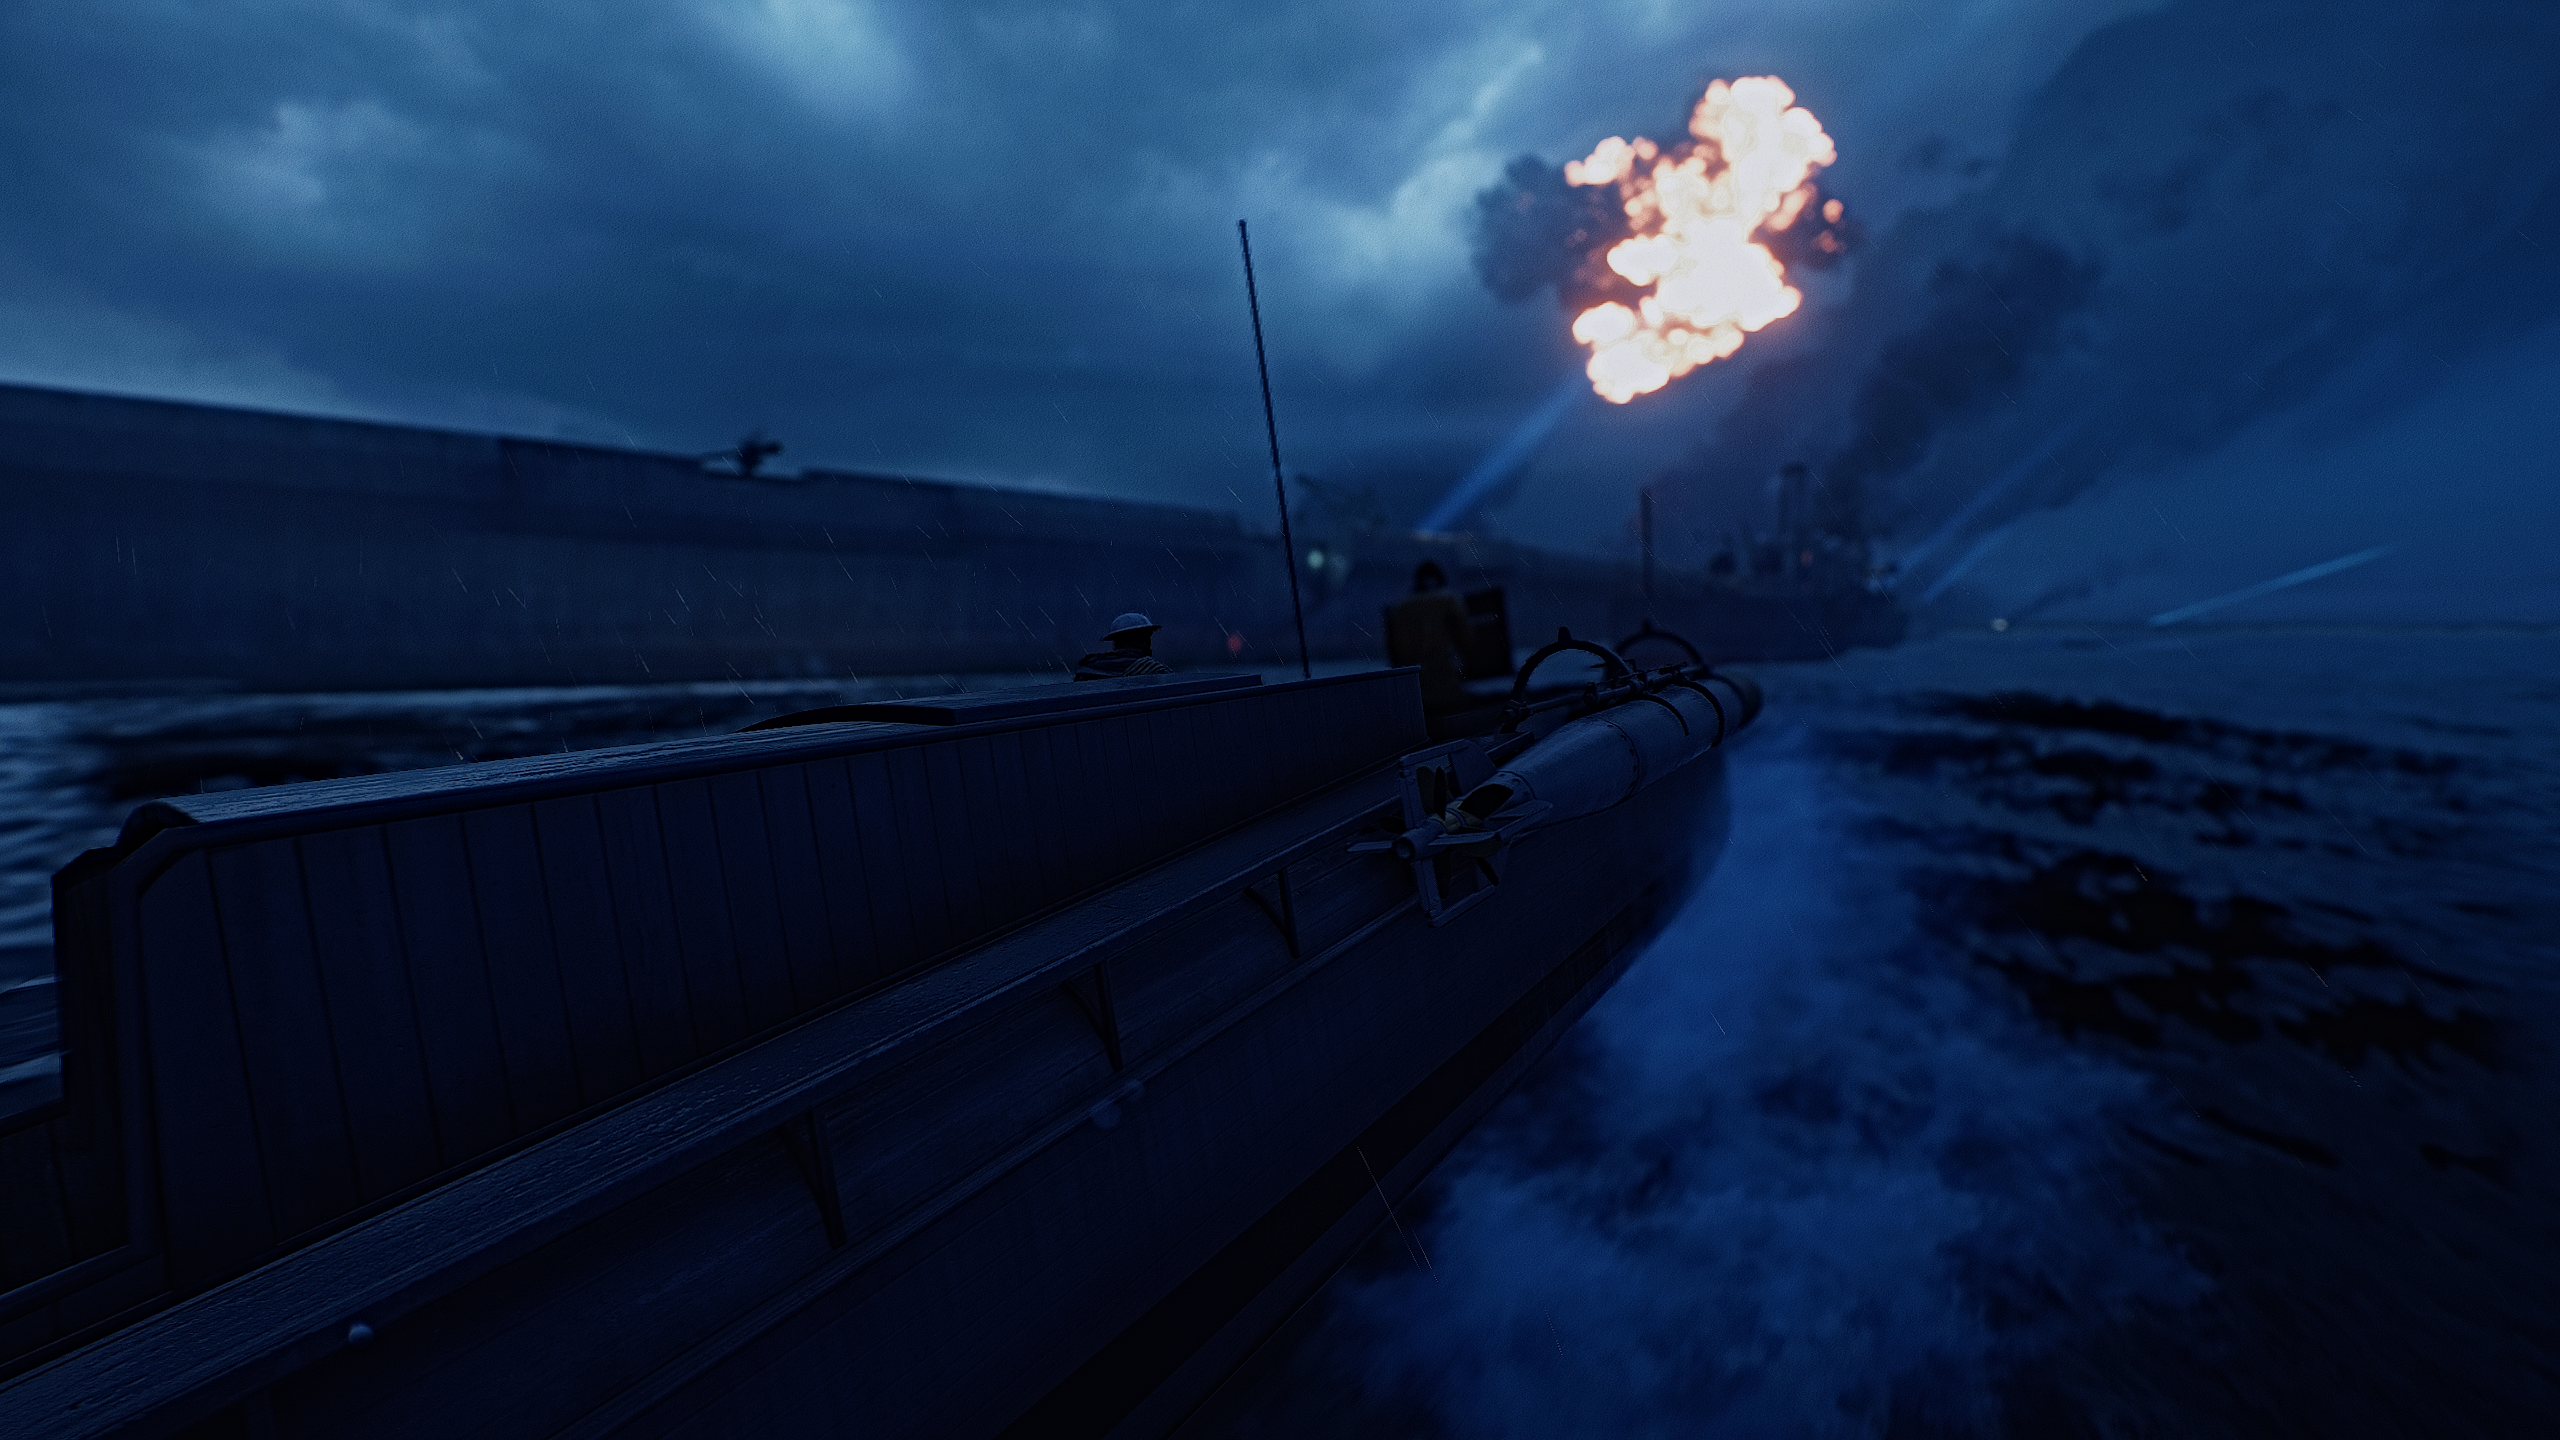 Battlefield 1 Boat Explosion 2560x1440